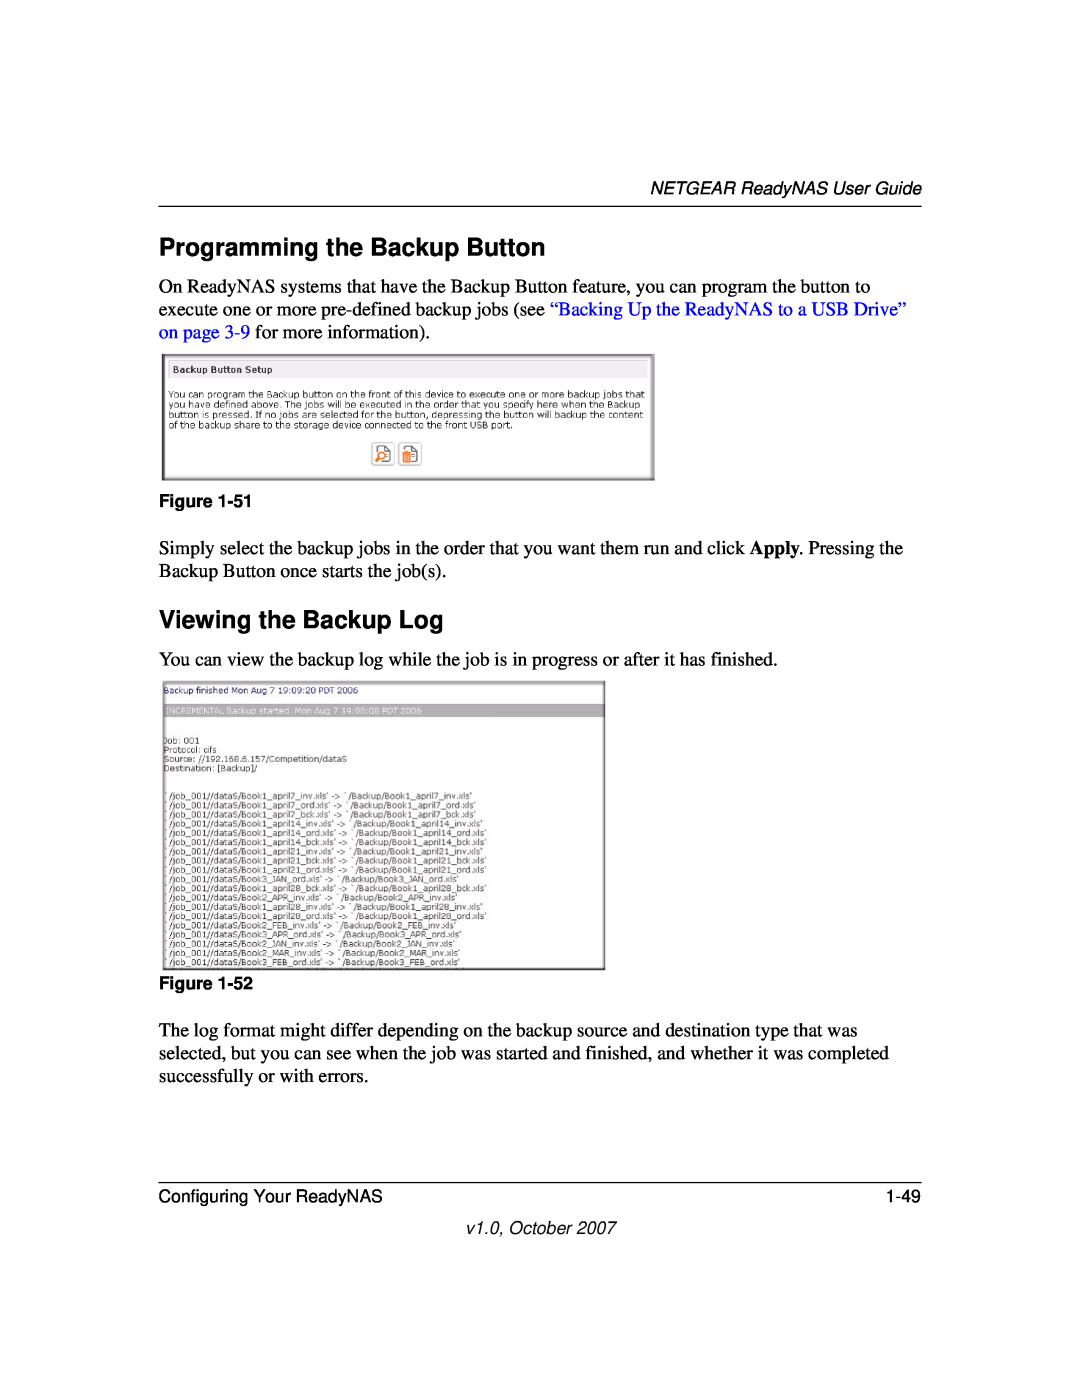 NETGEAR RN10223D-100NAS, RN31400-100NAS, RN31441E-100NAS manual Programming the Backup Button, Viewing the Backup Log 